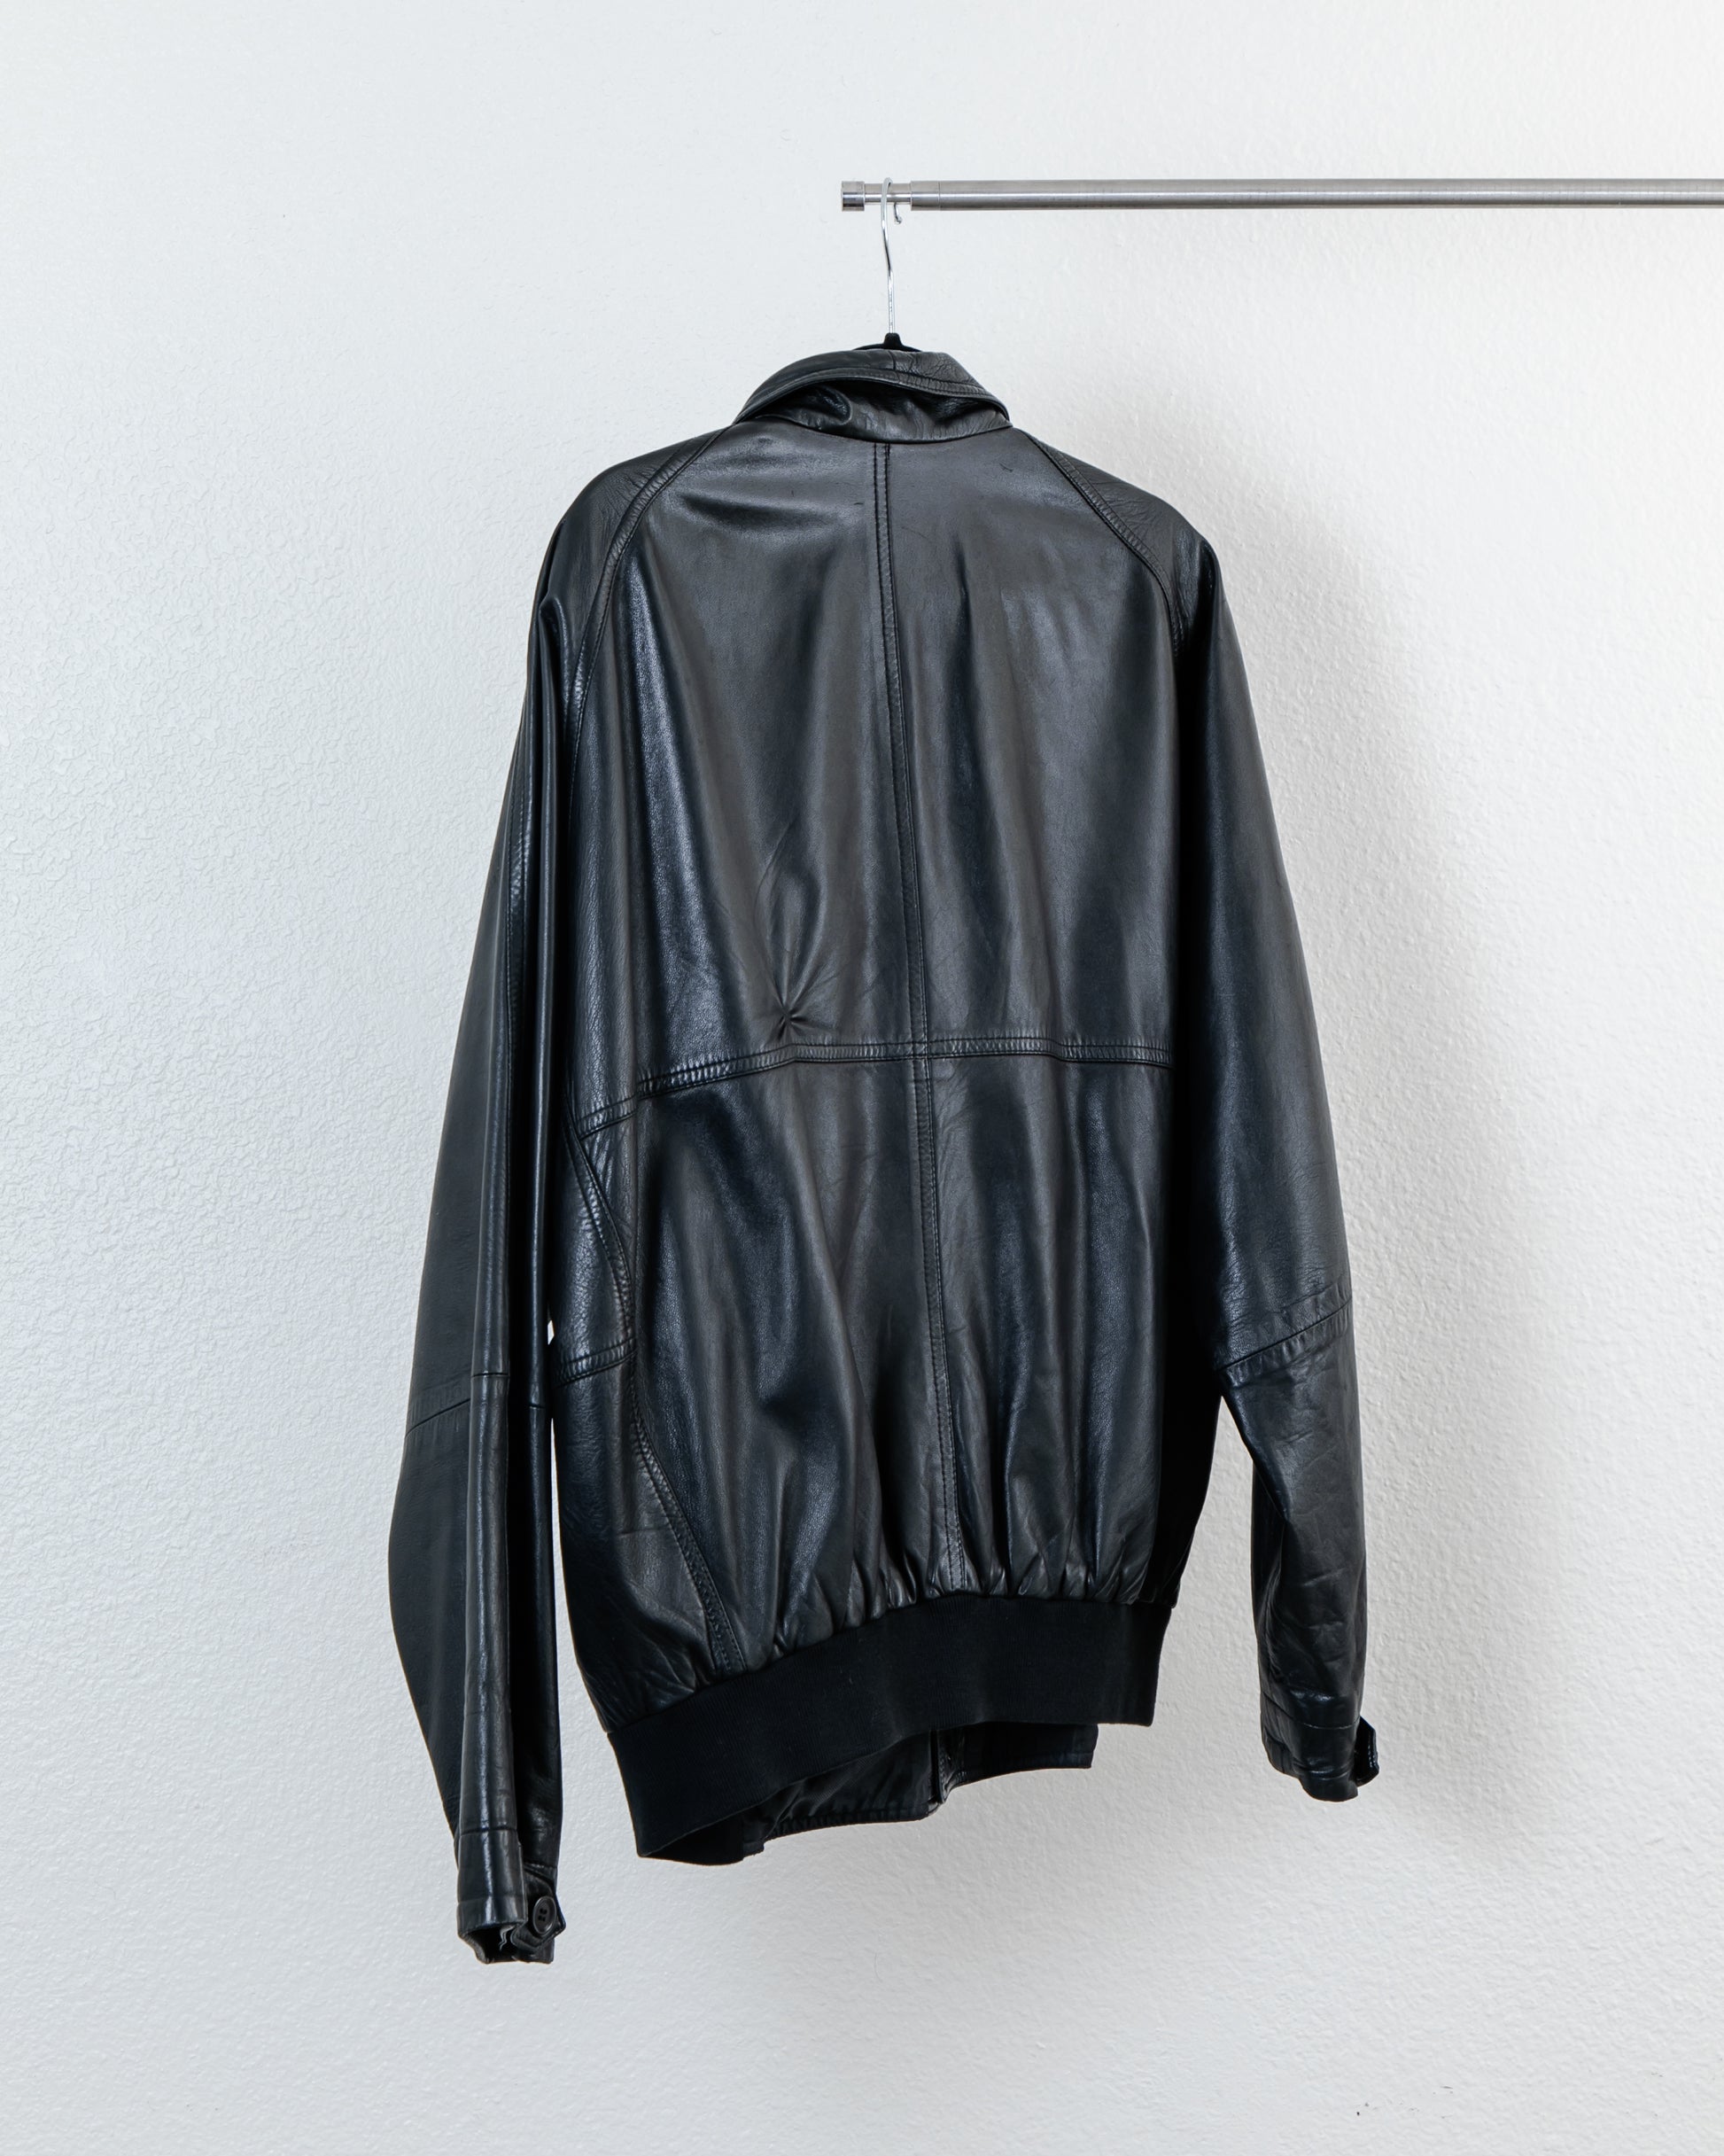 Gianfranco Ferré Leather Jacket – Bimbo Vintage